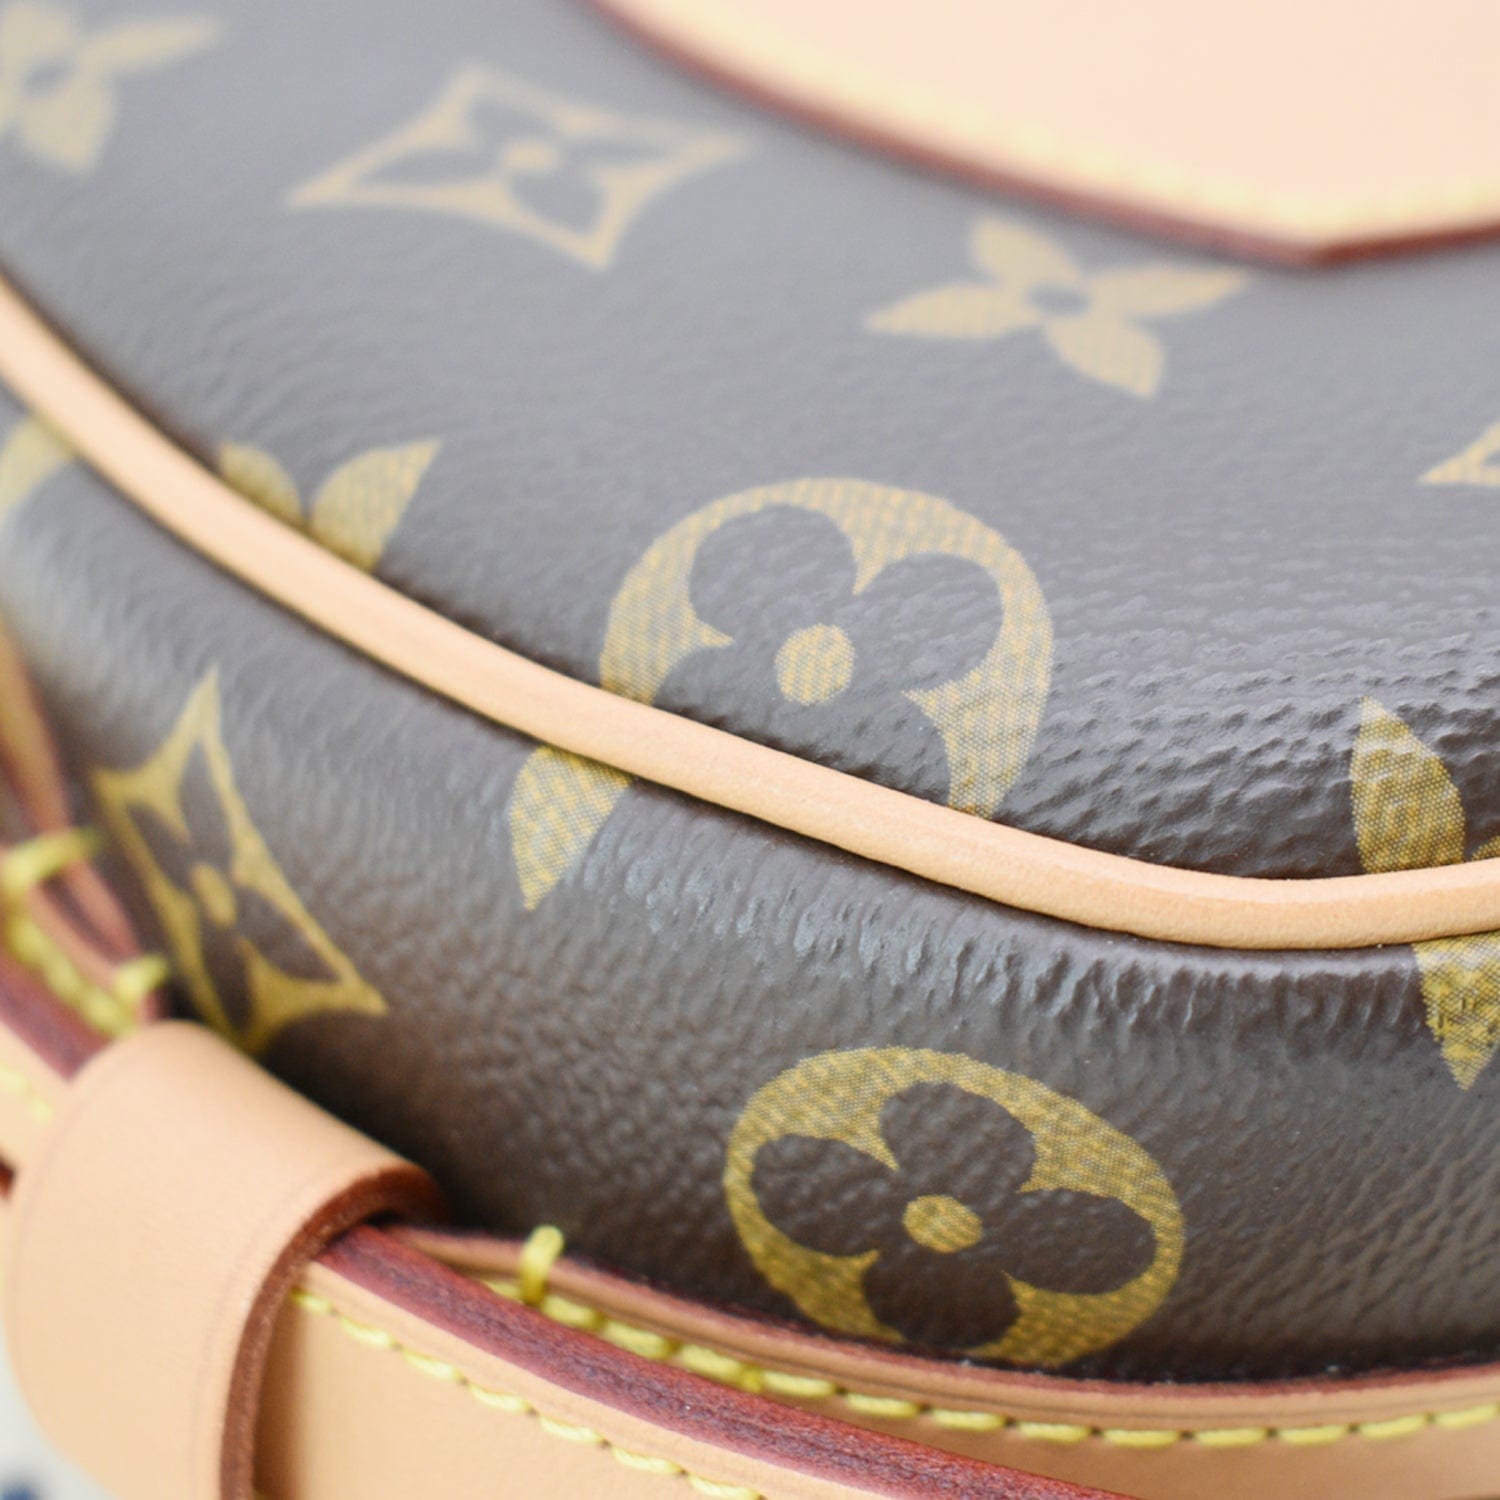 Travel Bag Louis Vuitton Boite Monogram Beauty Case